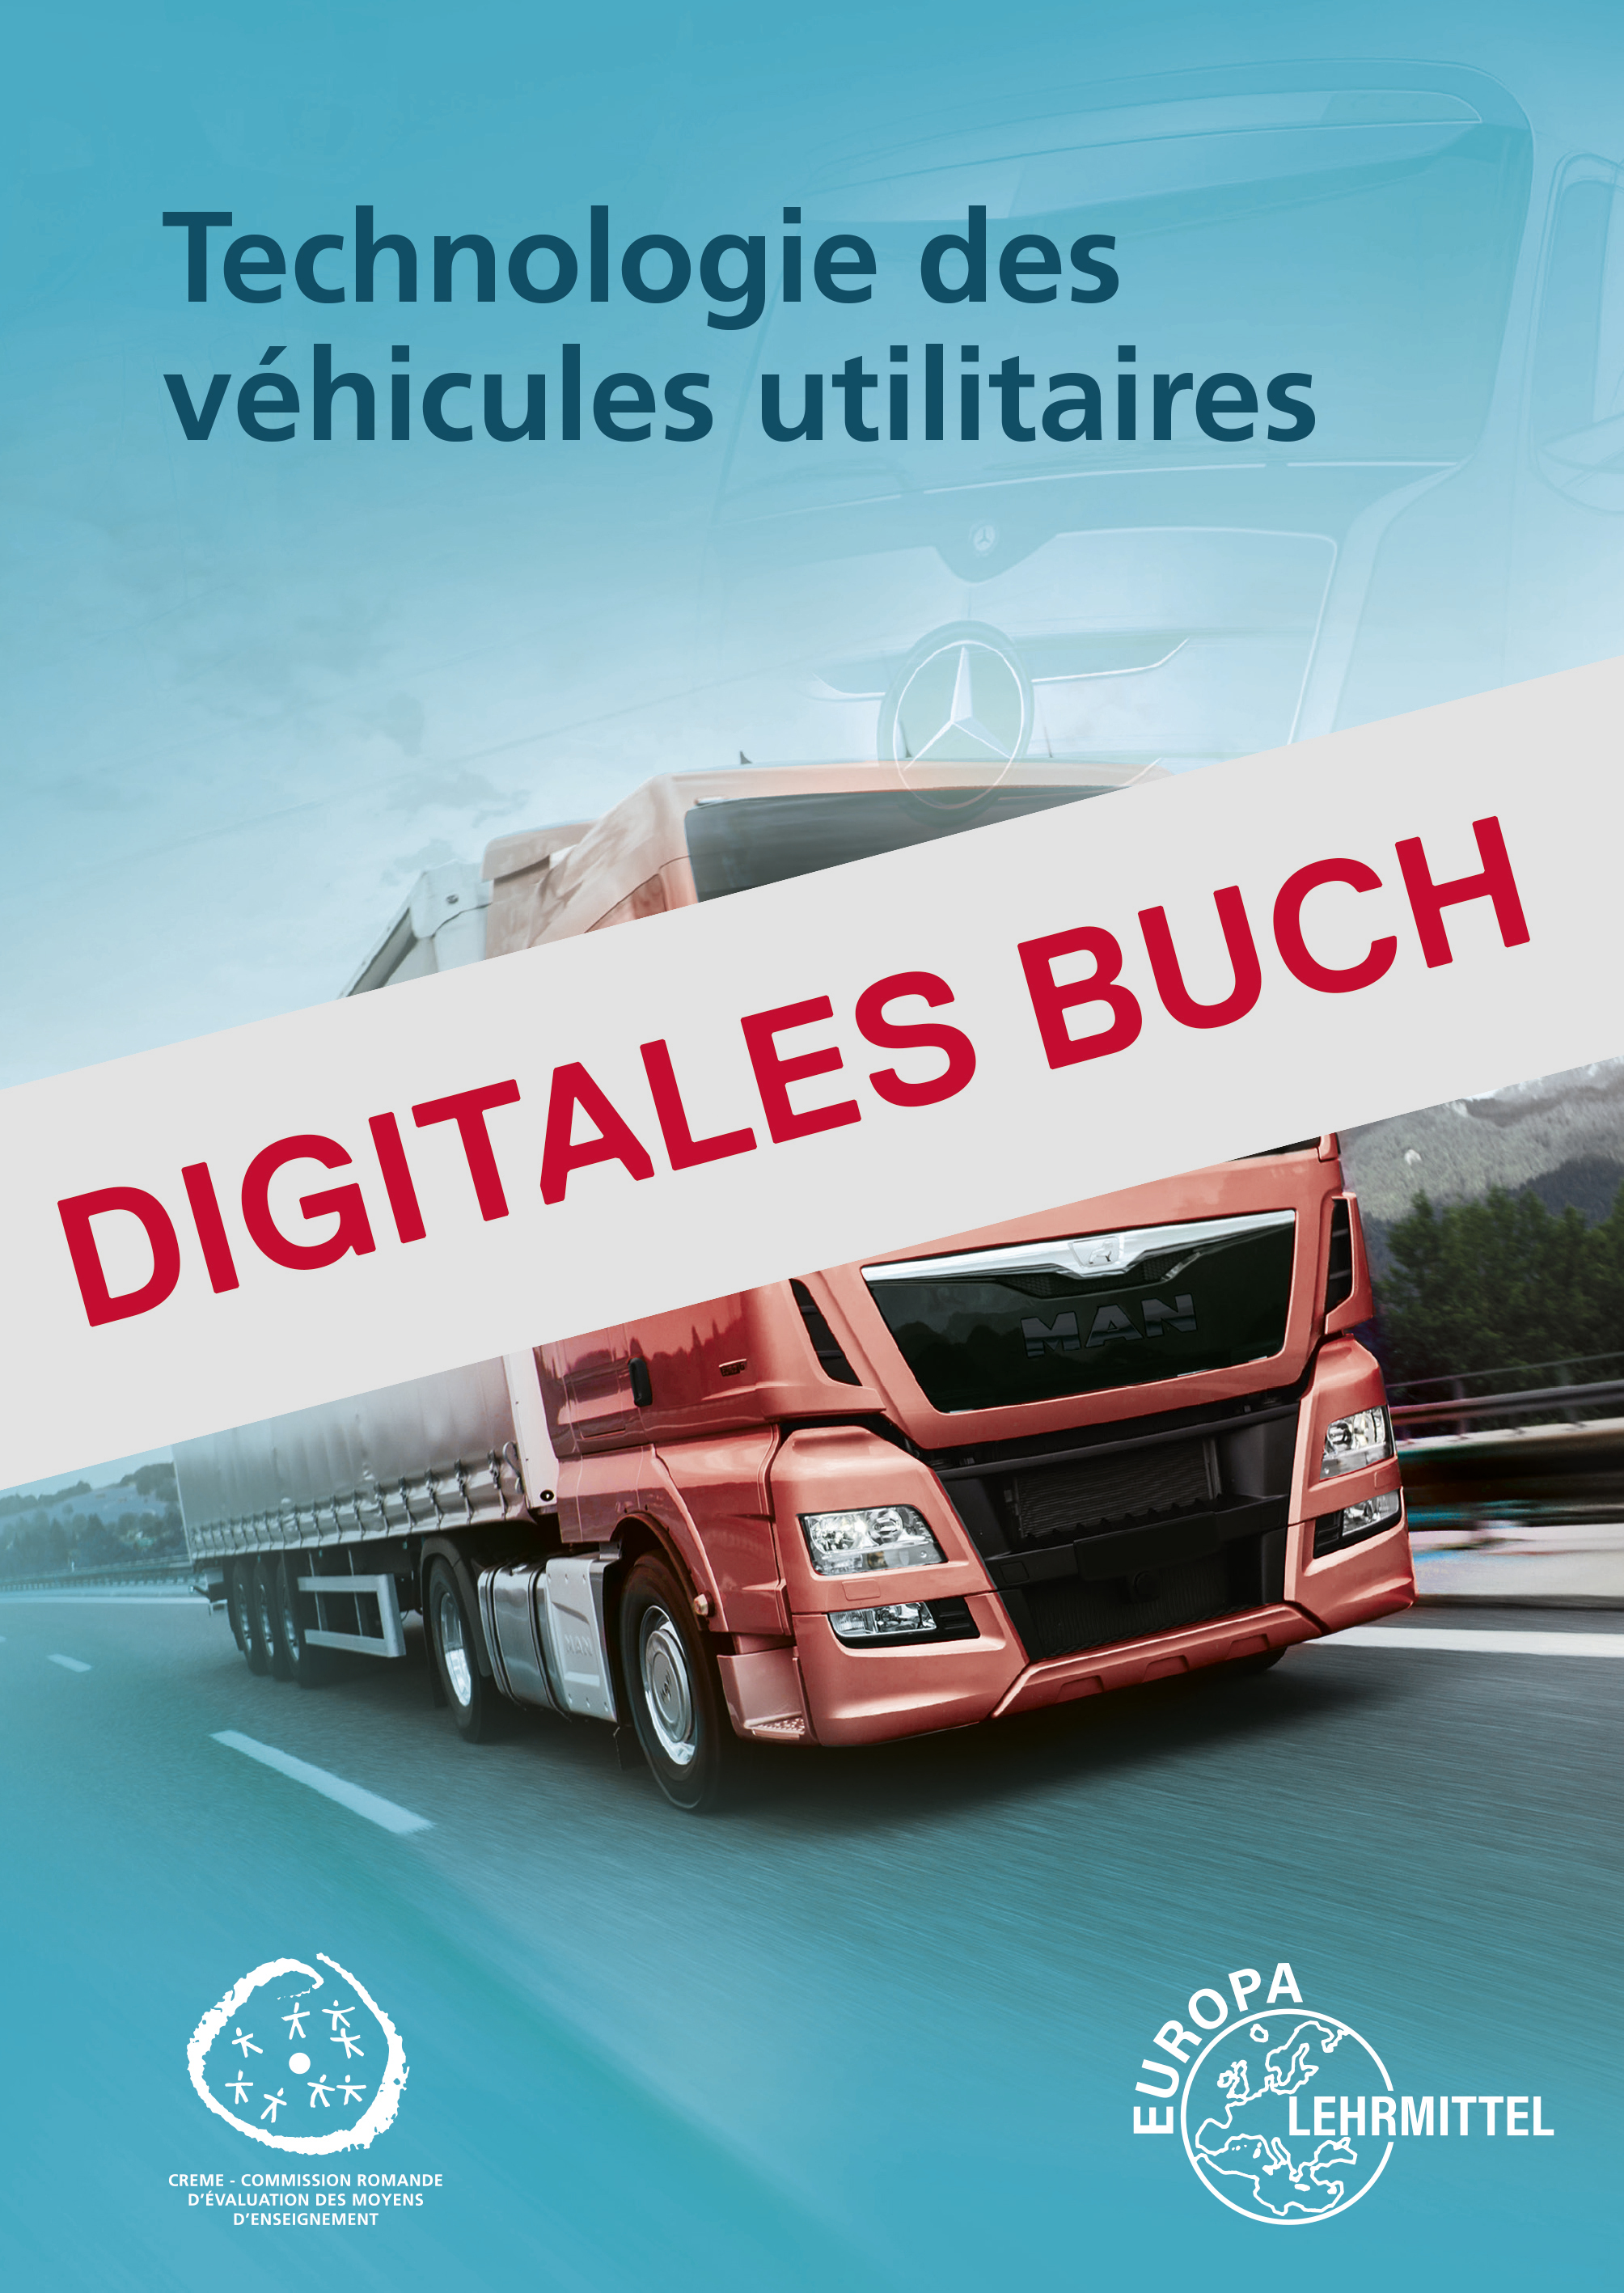 Technologie des véhicules utilitaires - Digitales Buch